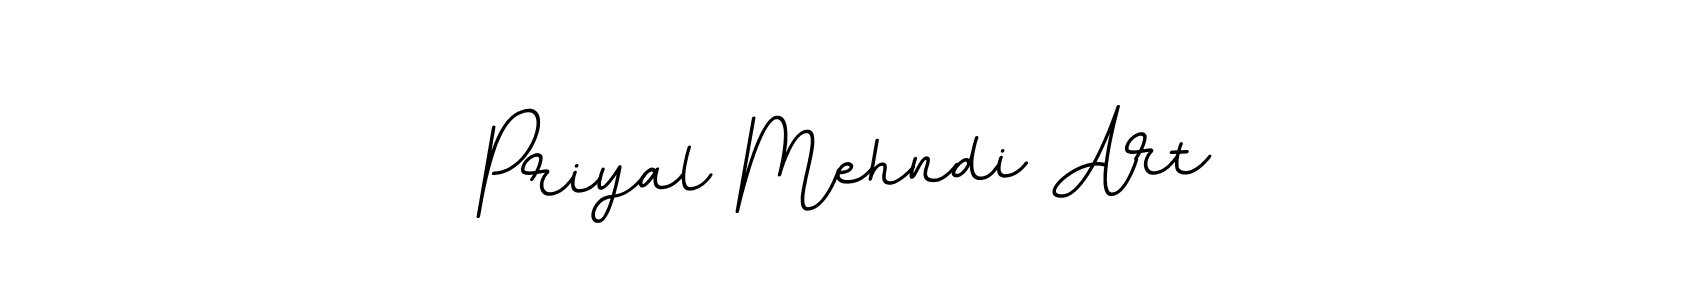 How to Draw Priyal Mehndi Art signature style? BallpointsItalic-DORy9 is a latest design signature styles for name Priyal Mehndi Art. Priyal Mehndi Art signature style 11 images and pictures png